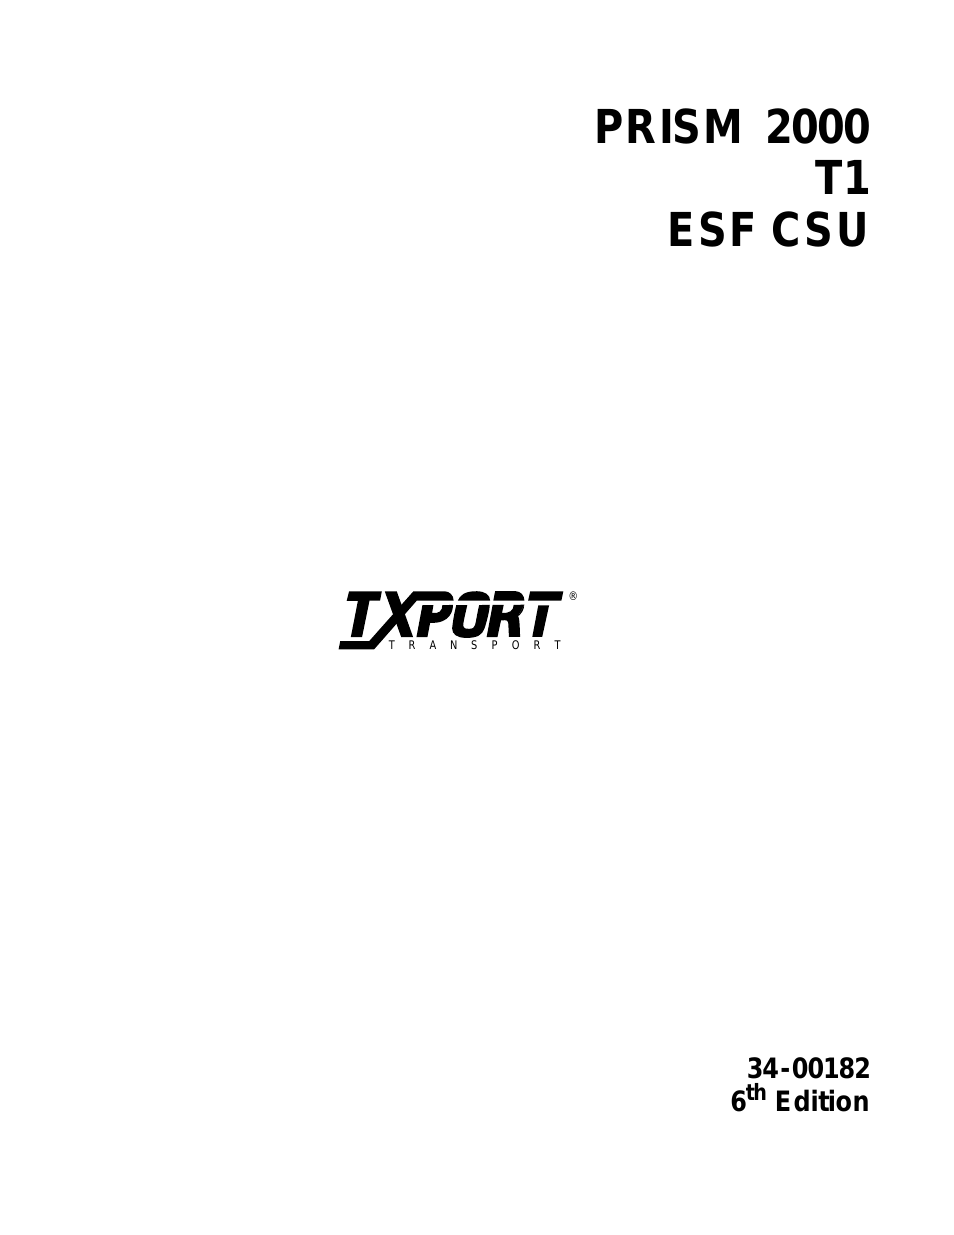 2000 (34-00182) Product Manual